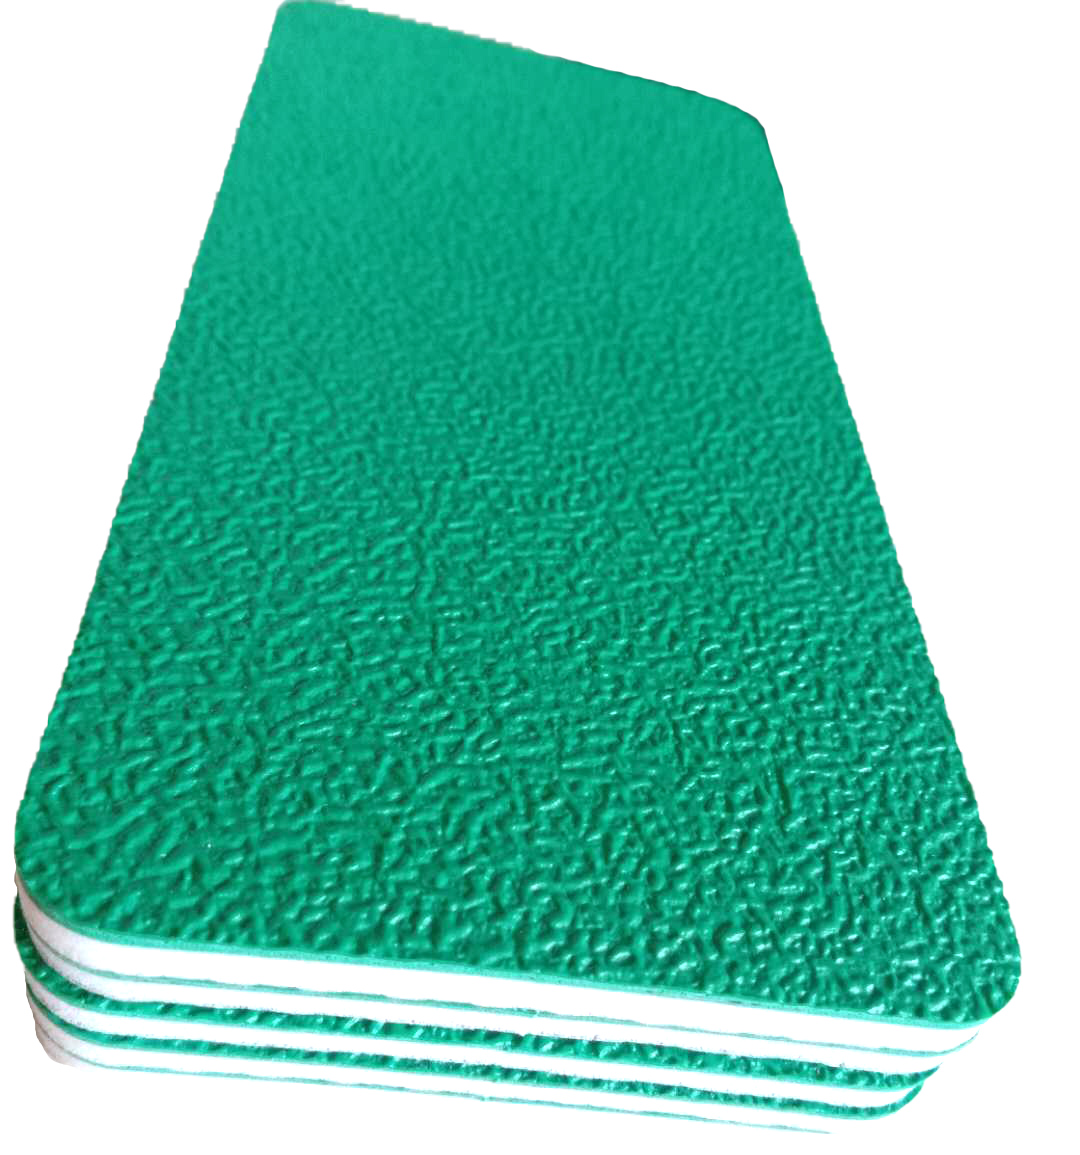 Hot sale PVC Flooring For Indoor Sports Court Badminton Mat cushion type